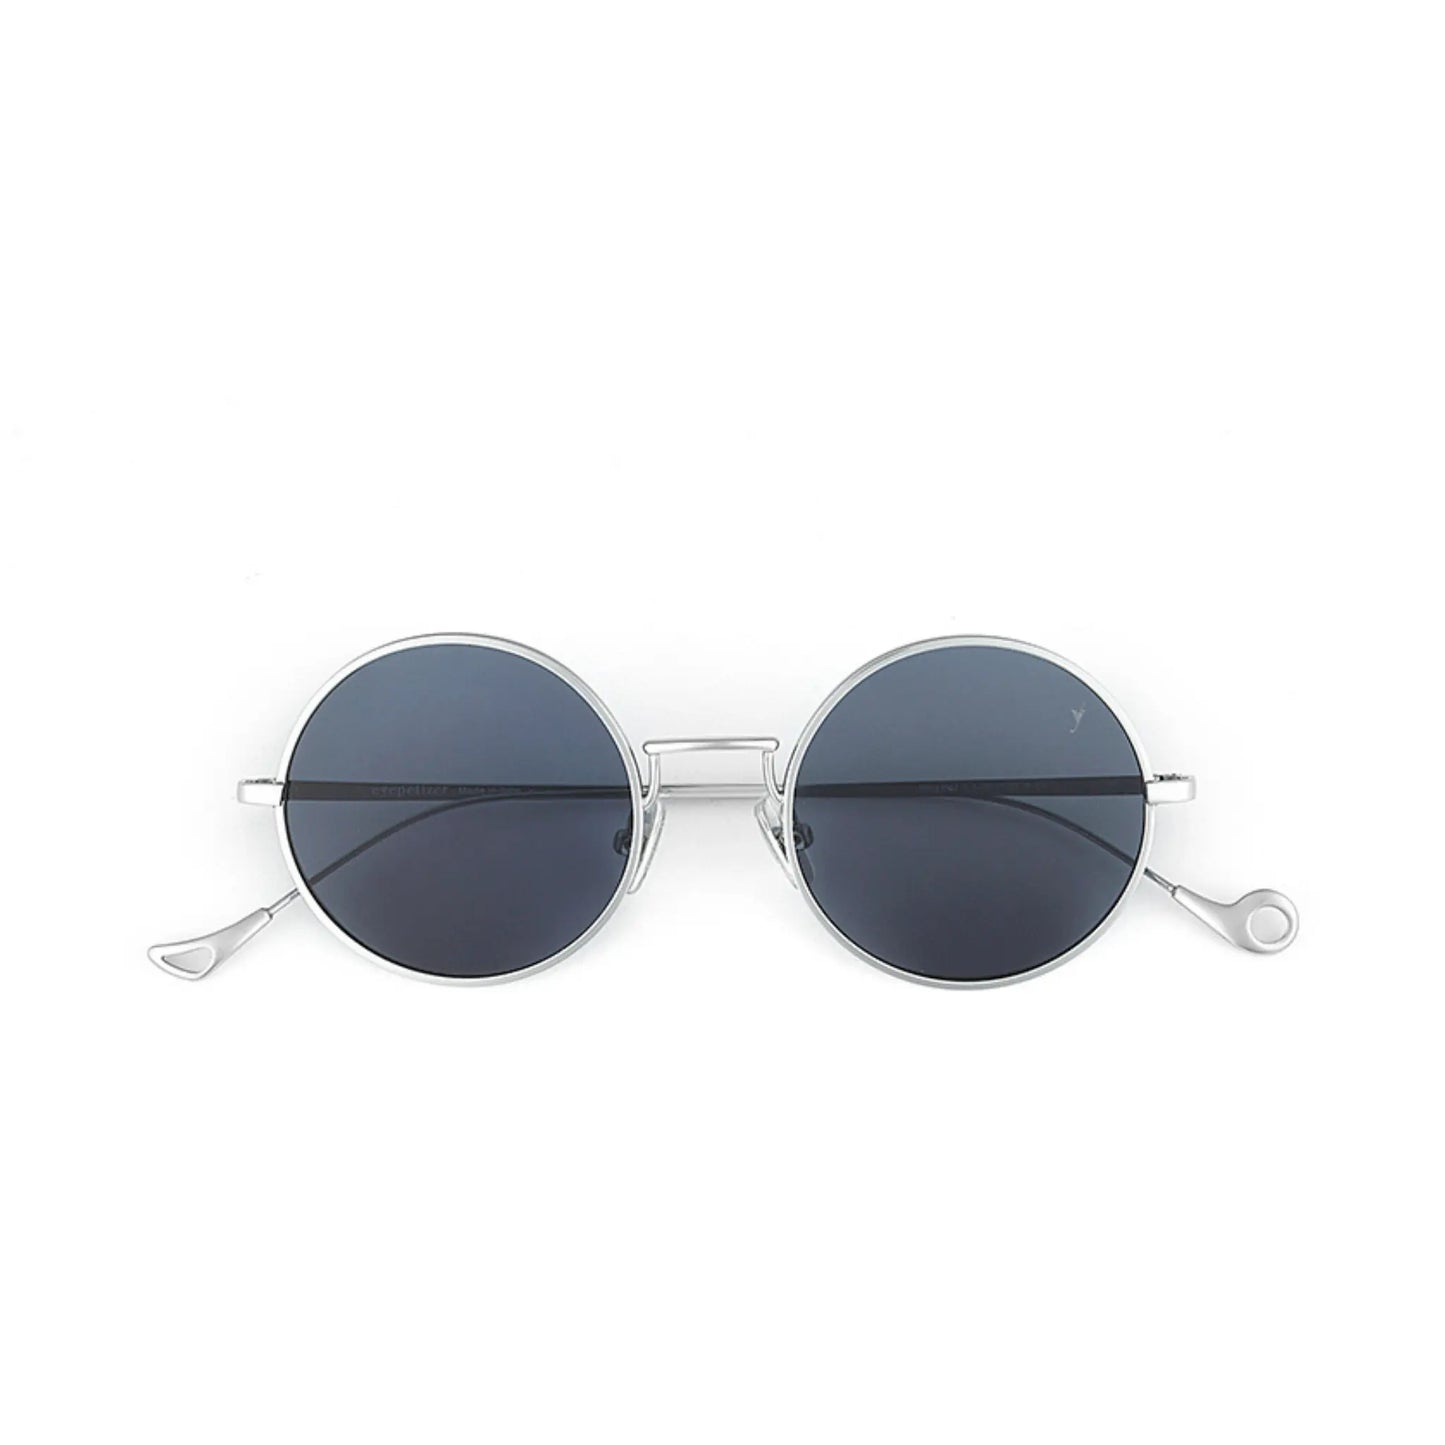 Eyepetizer sunglasses WILLIAM C.1-39-01